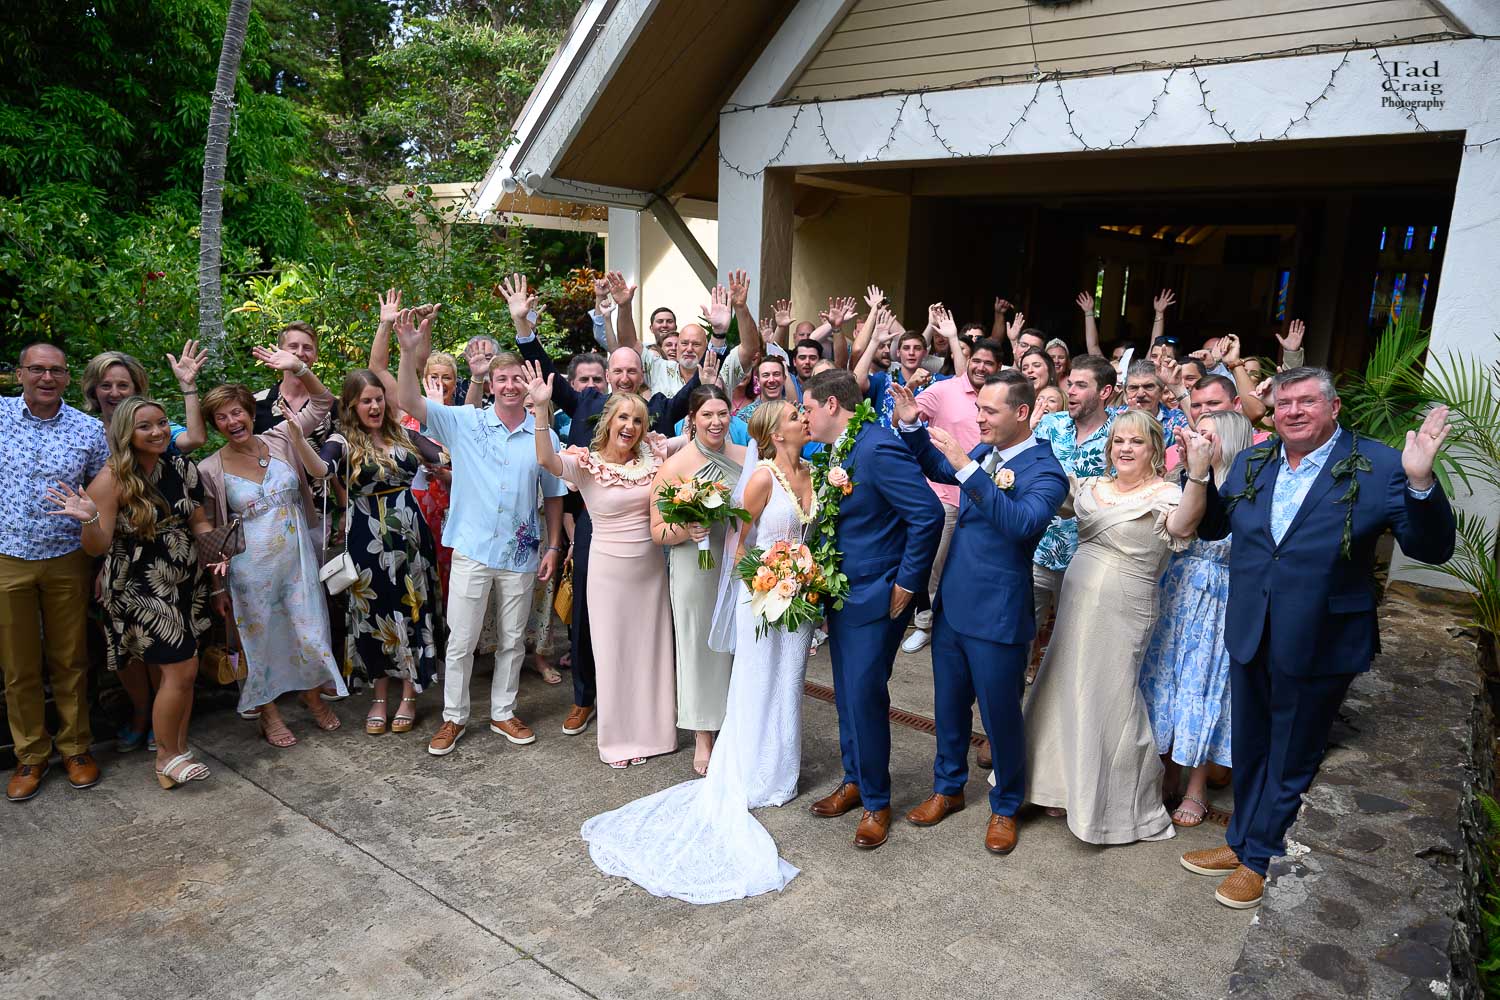 Maui Destination Wedding group photo